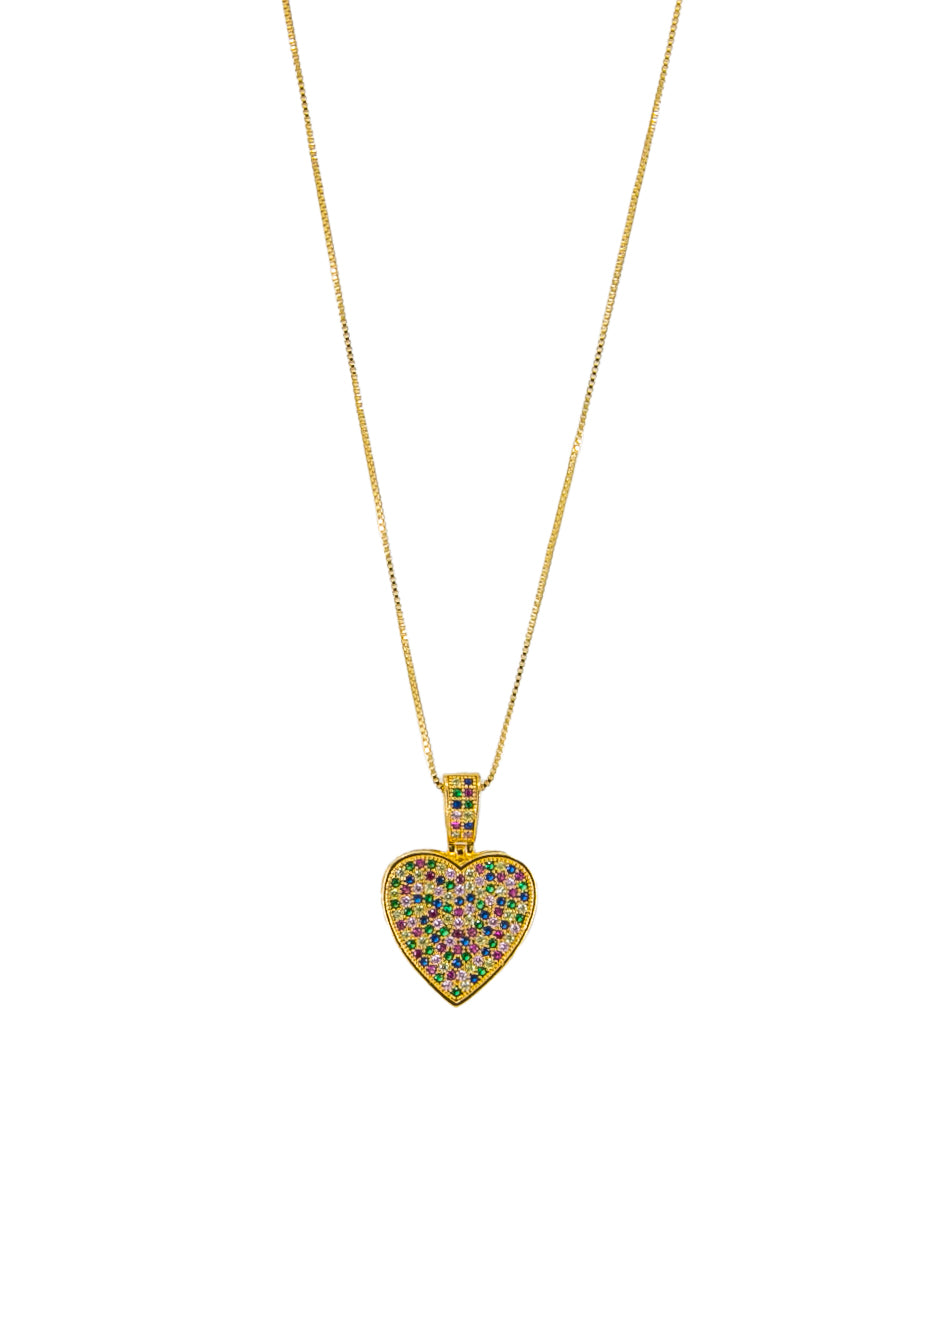 Emma Multicolored Heart Pendant Necklace